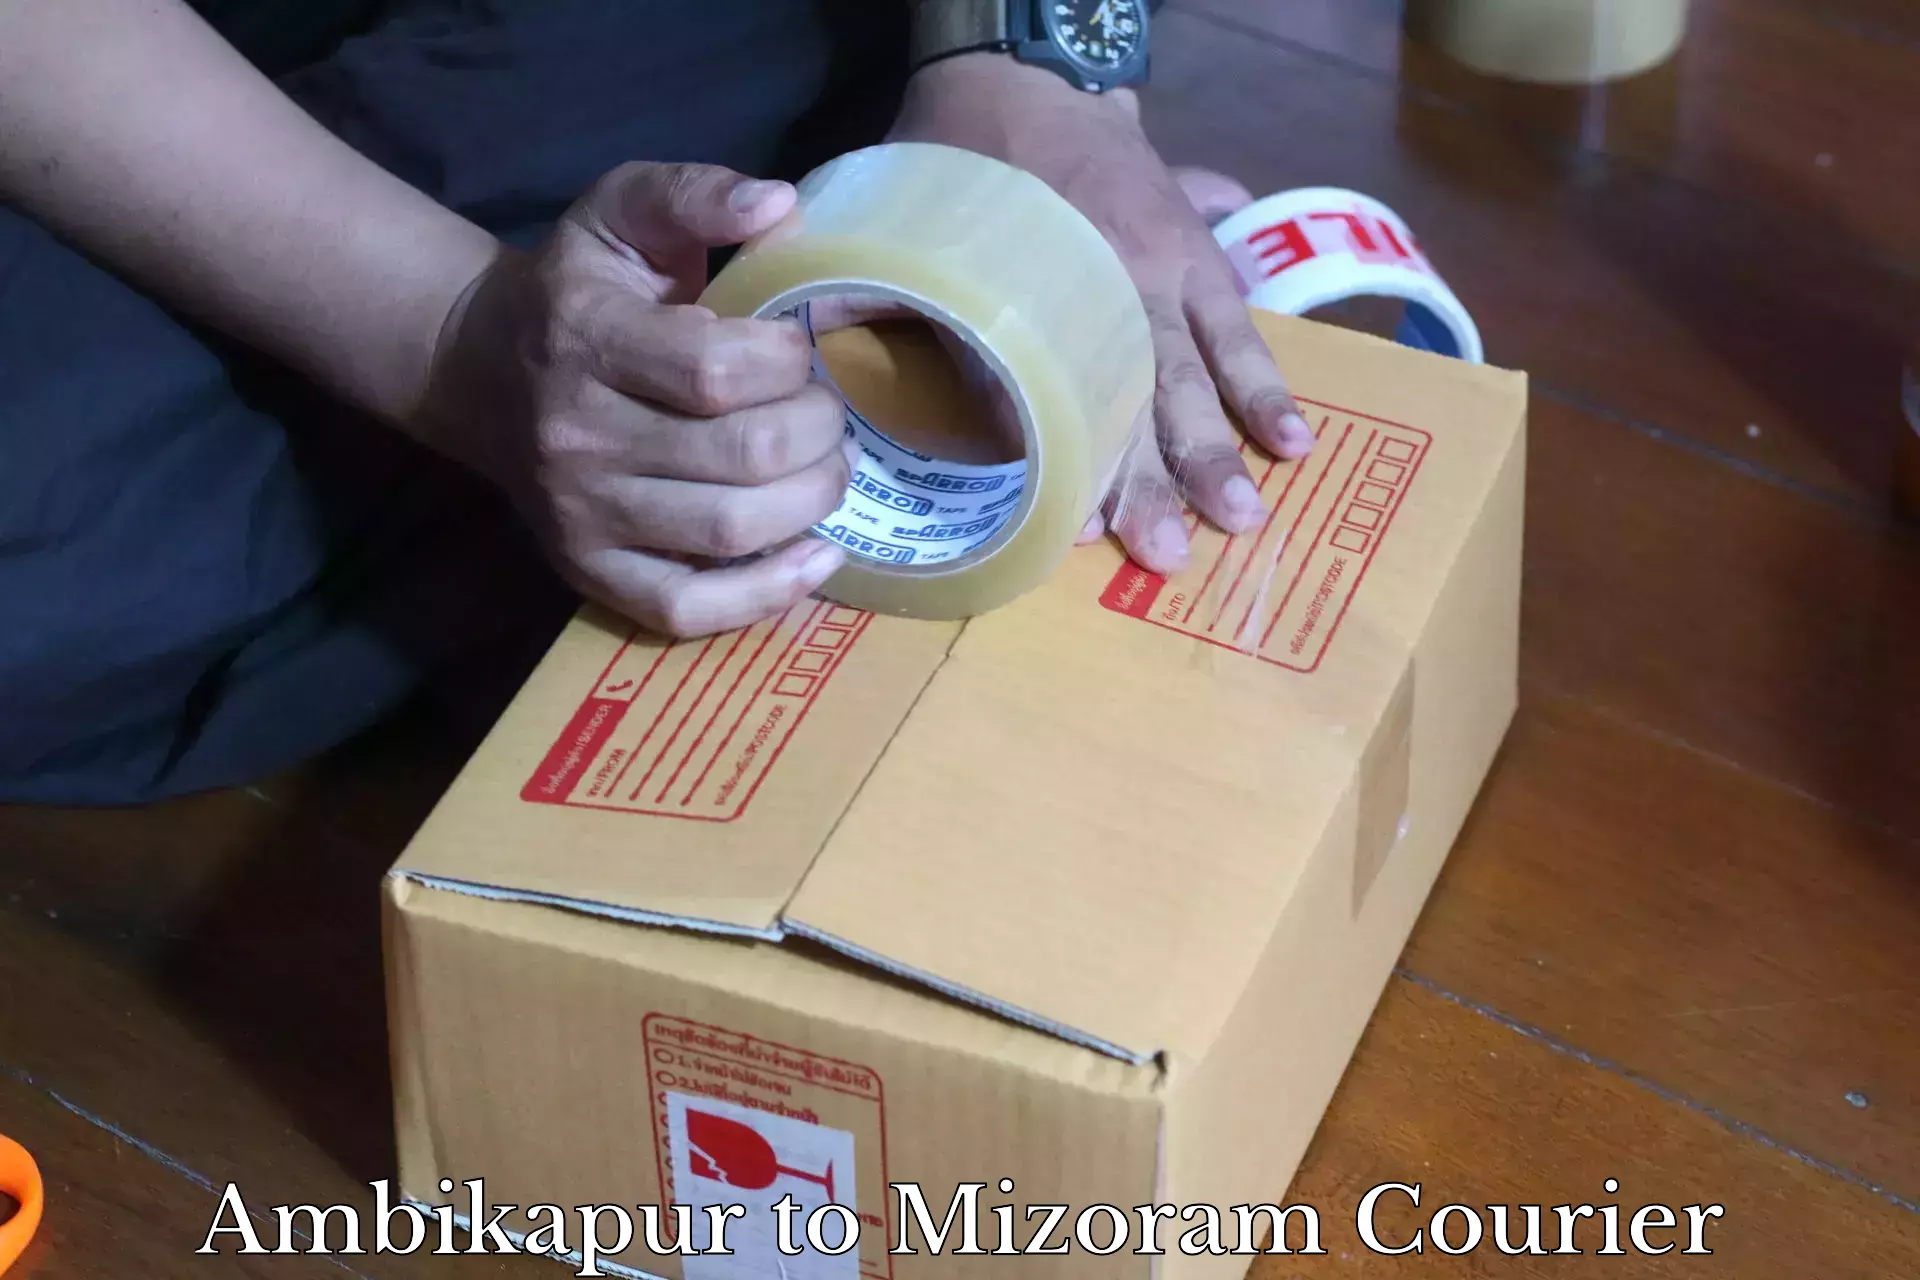 Reliable shipping partners Ambikapur to Mizoram